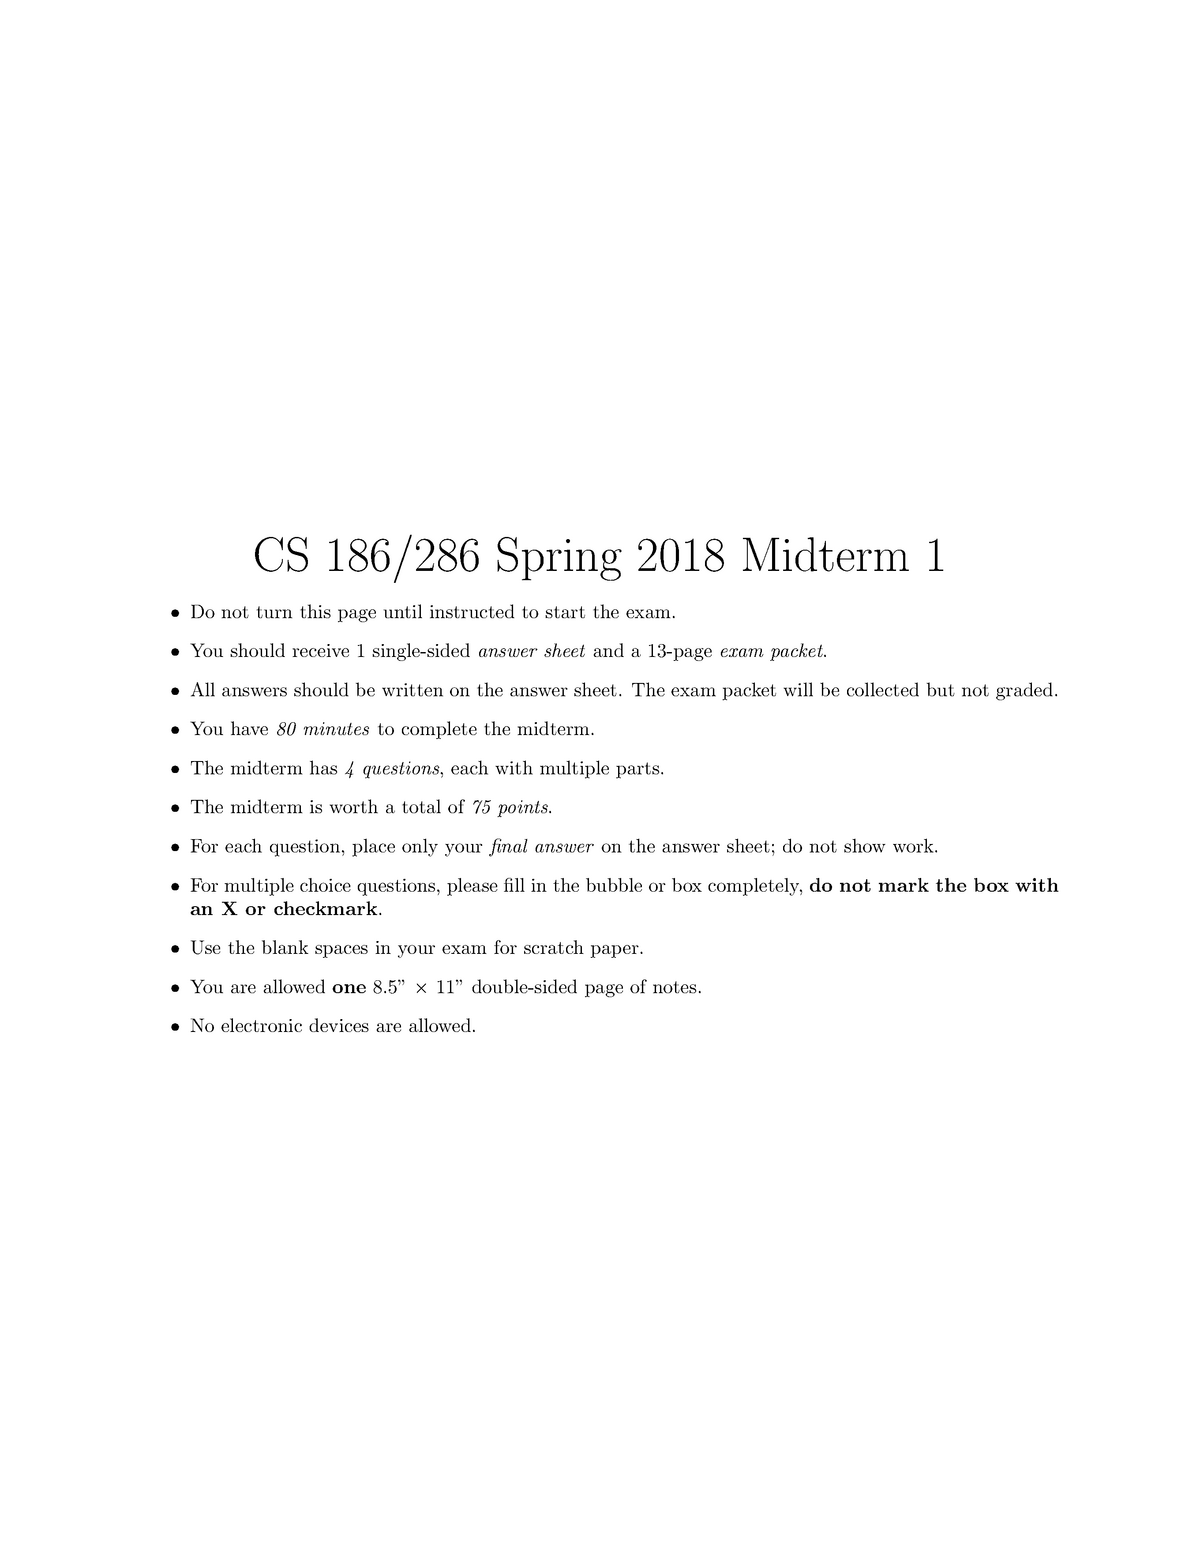 Midterm 1 2018, questions CS 186/286 Spring 2018 Midterm 1 Do not